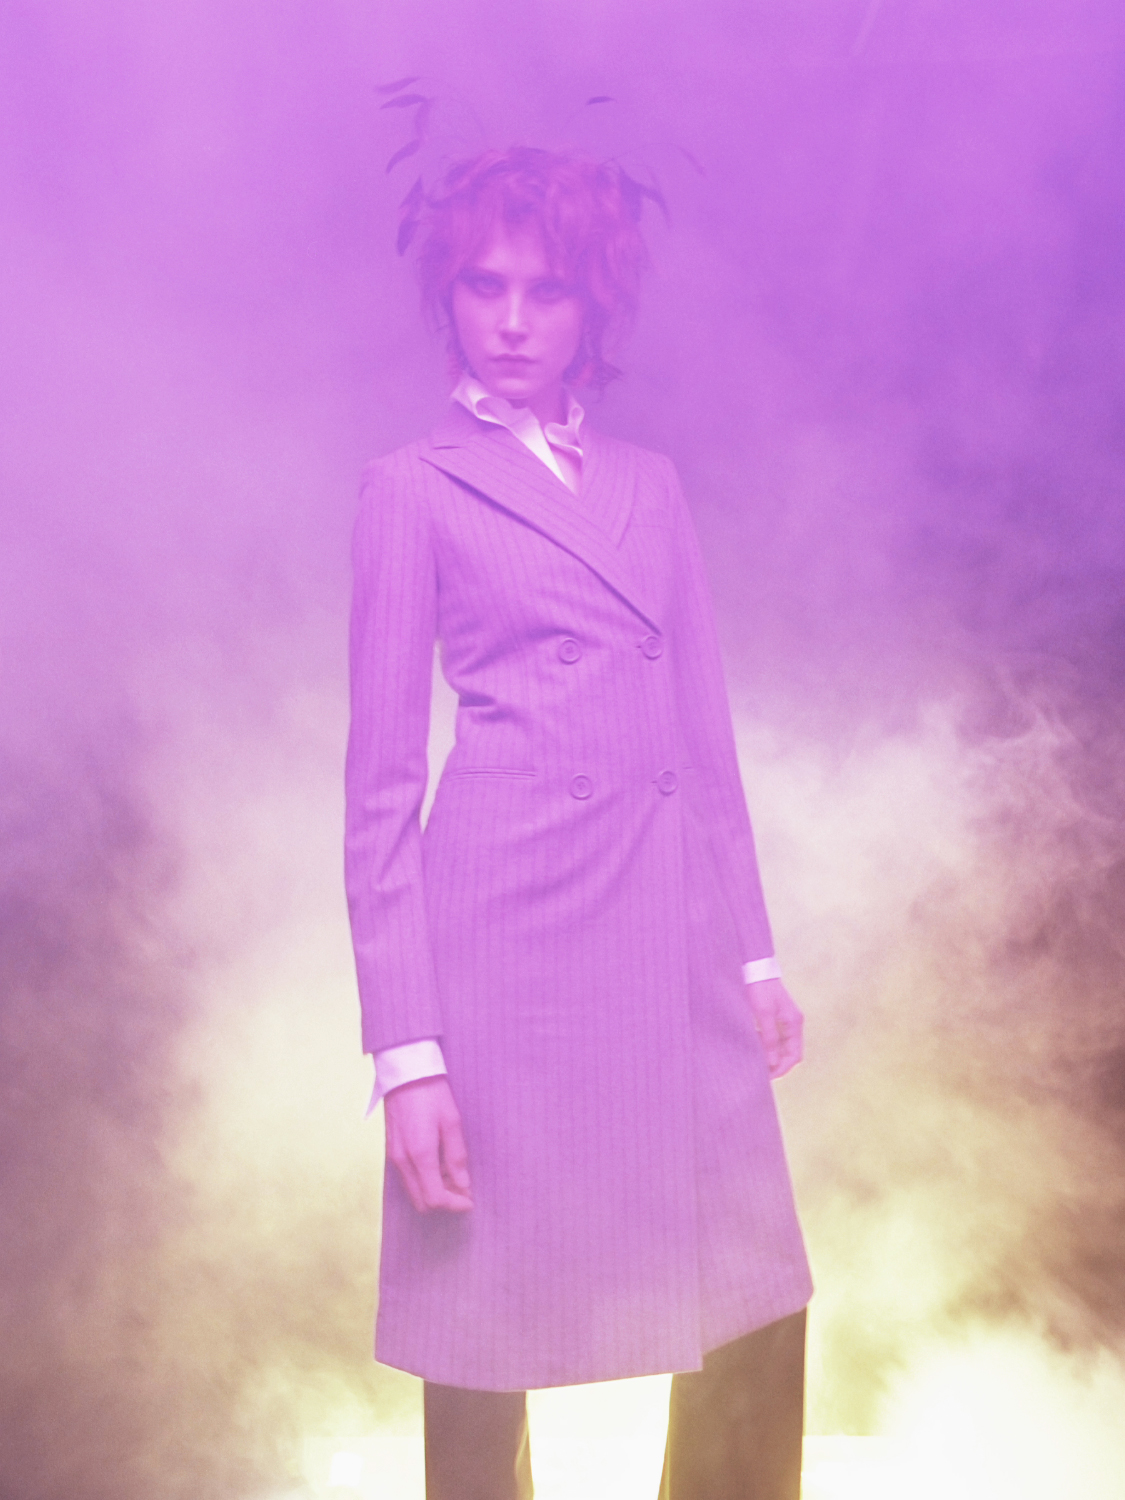 Purple+Haze+fashion+photography+by+Patrik+Andersson.jpeg